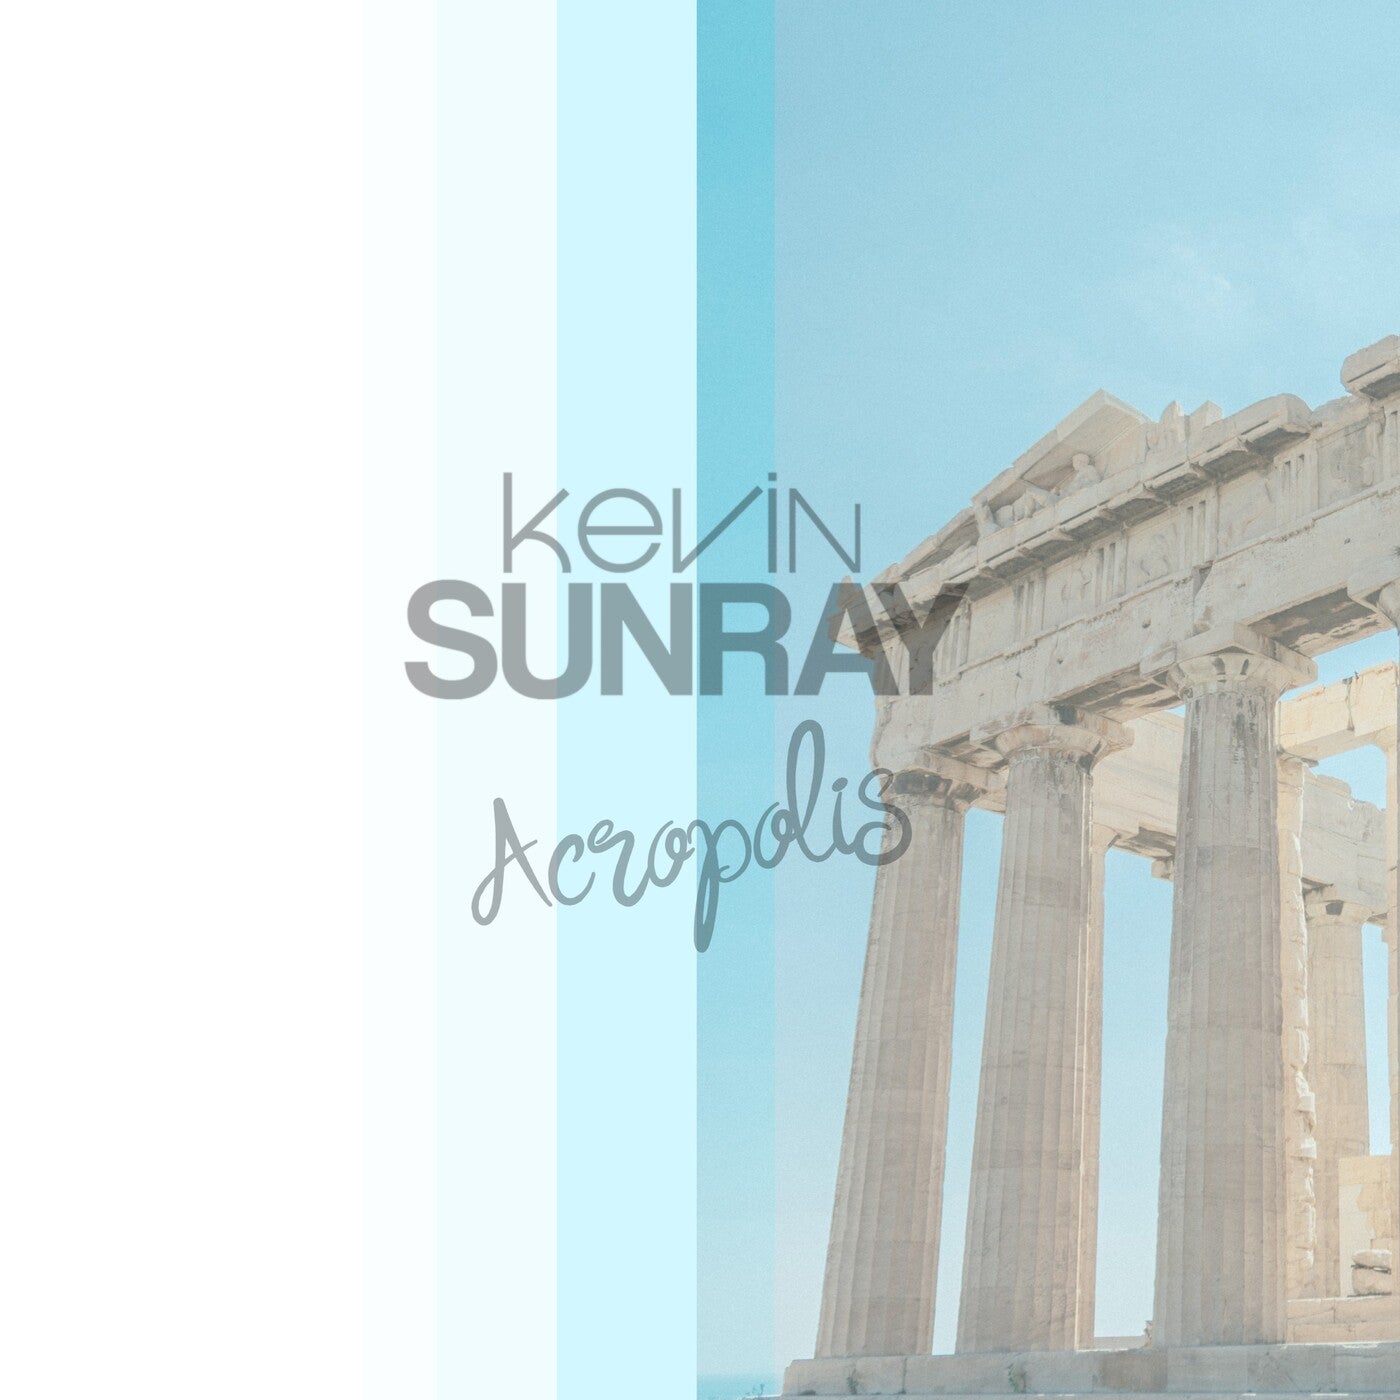 Kevin Sunray – Acropolis [TRBT017]